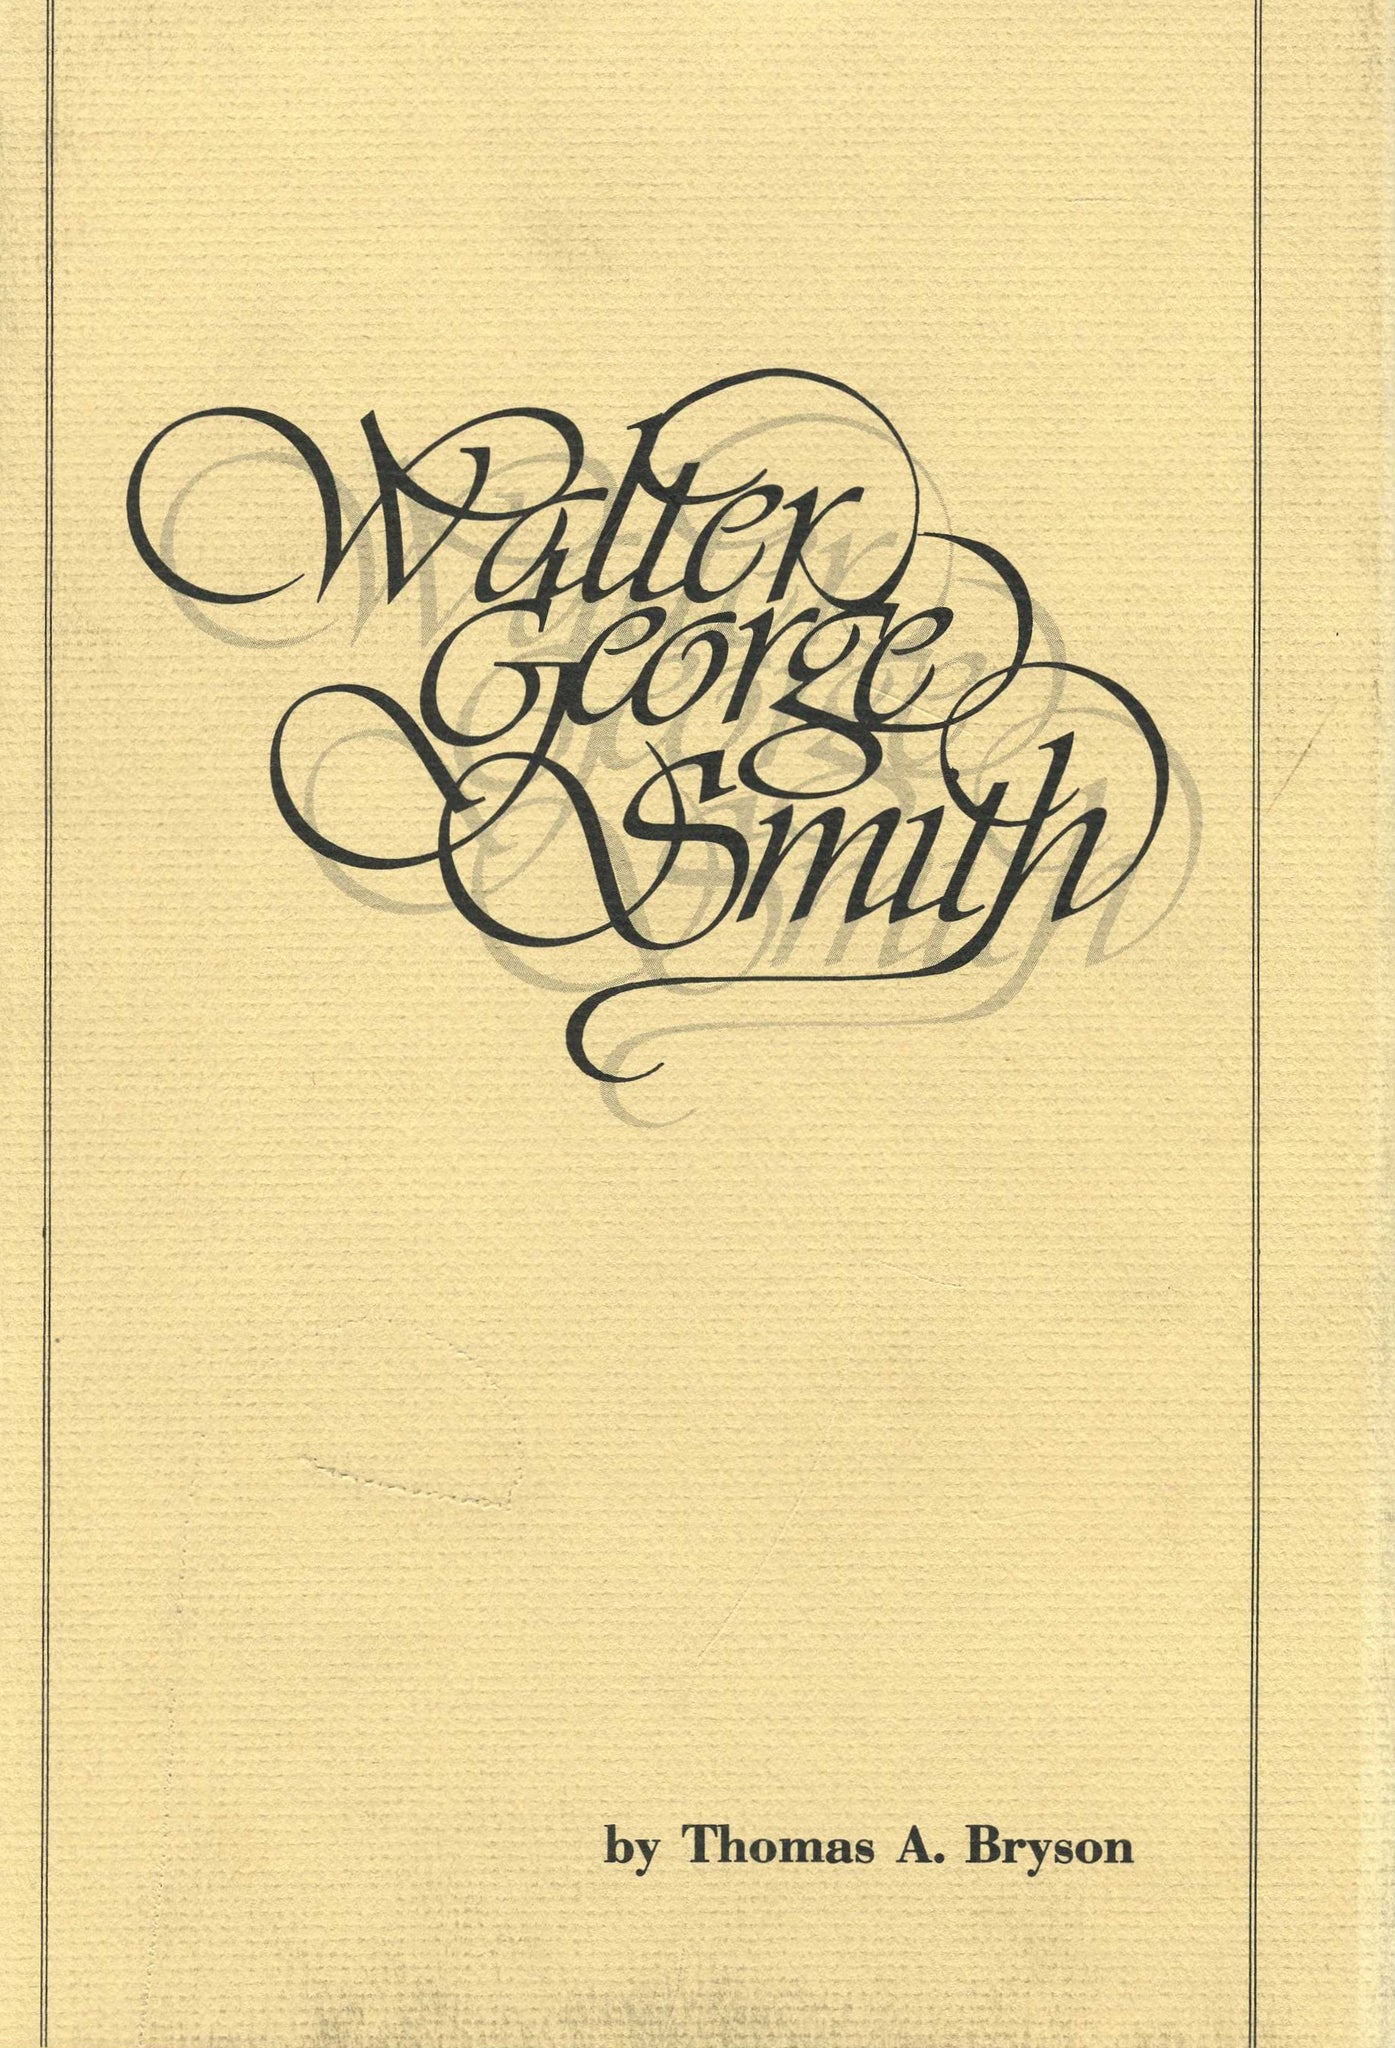 WALTER GEORGE SMITH